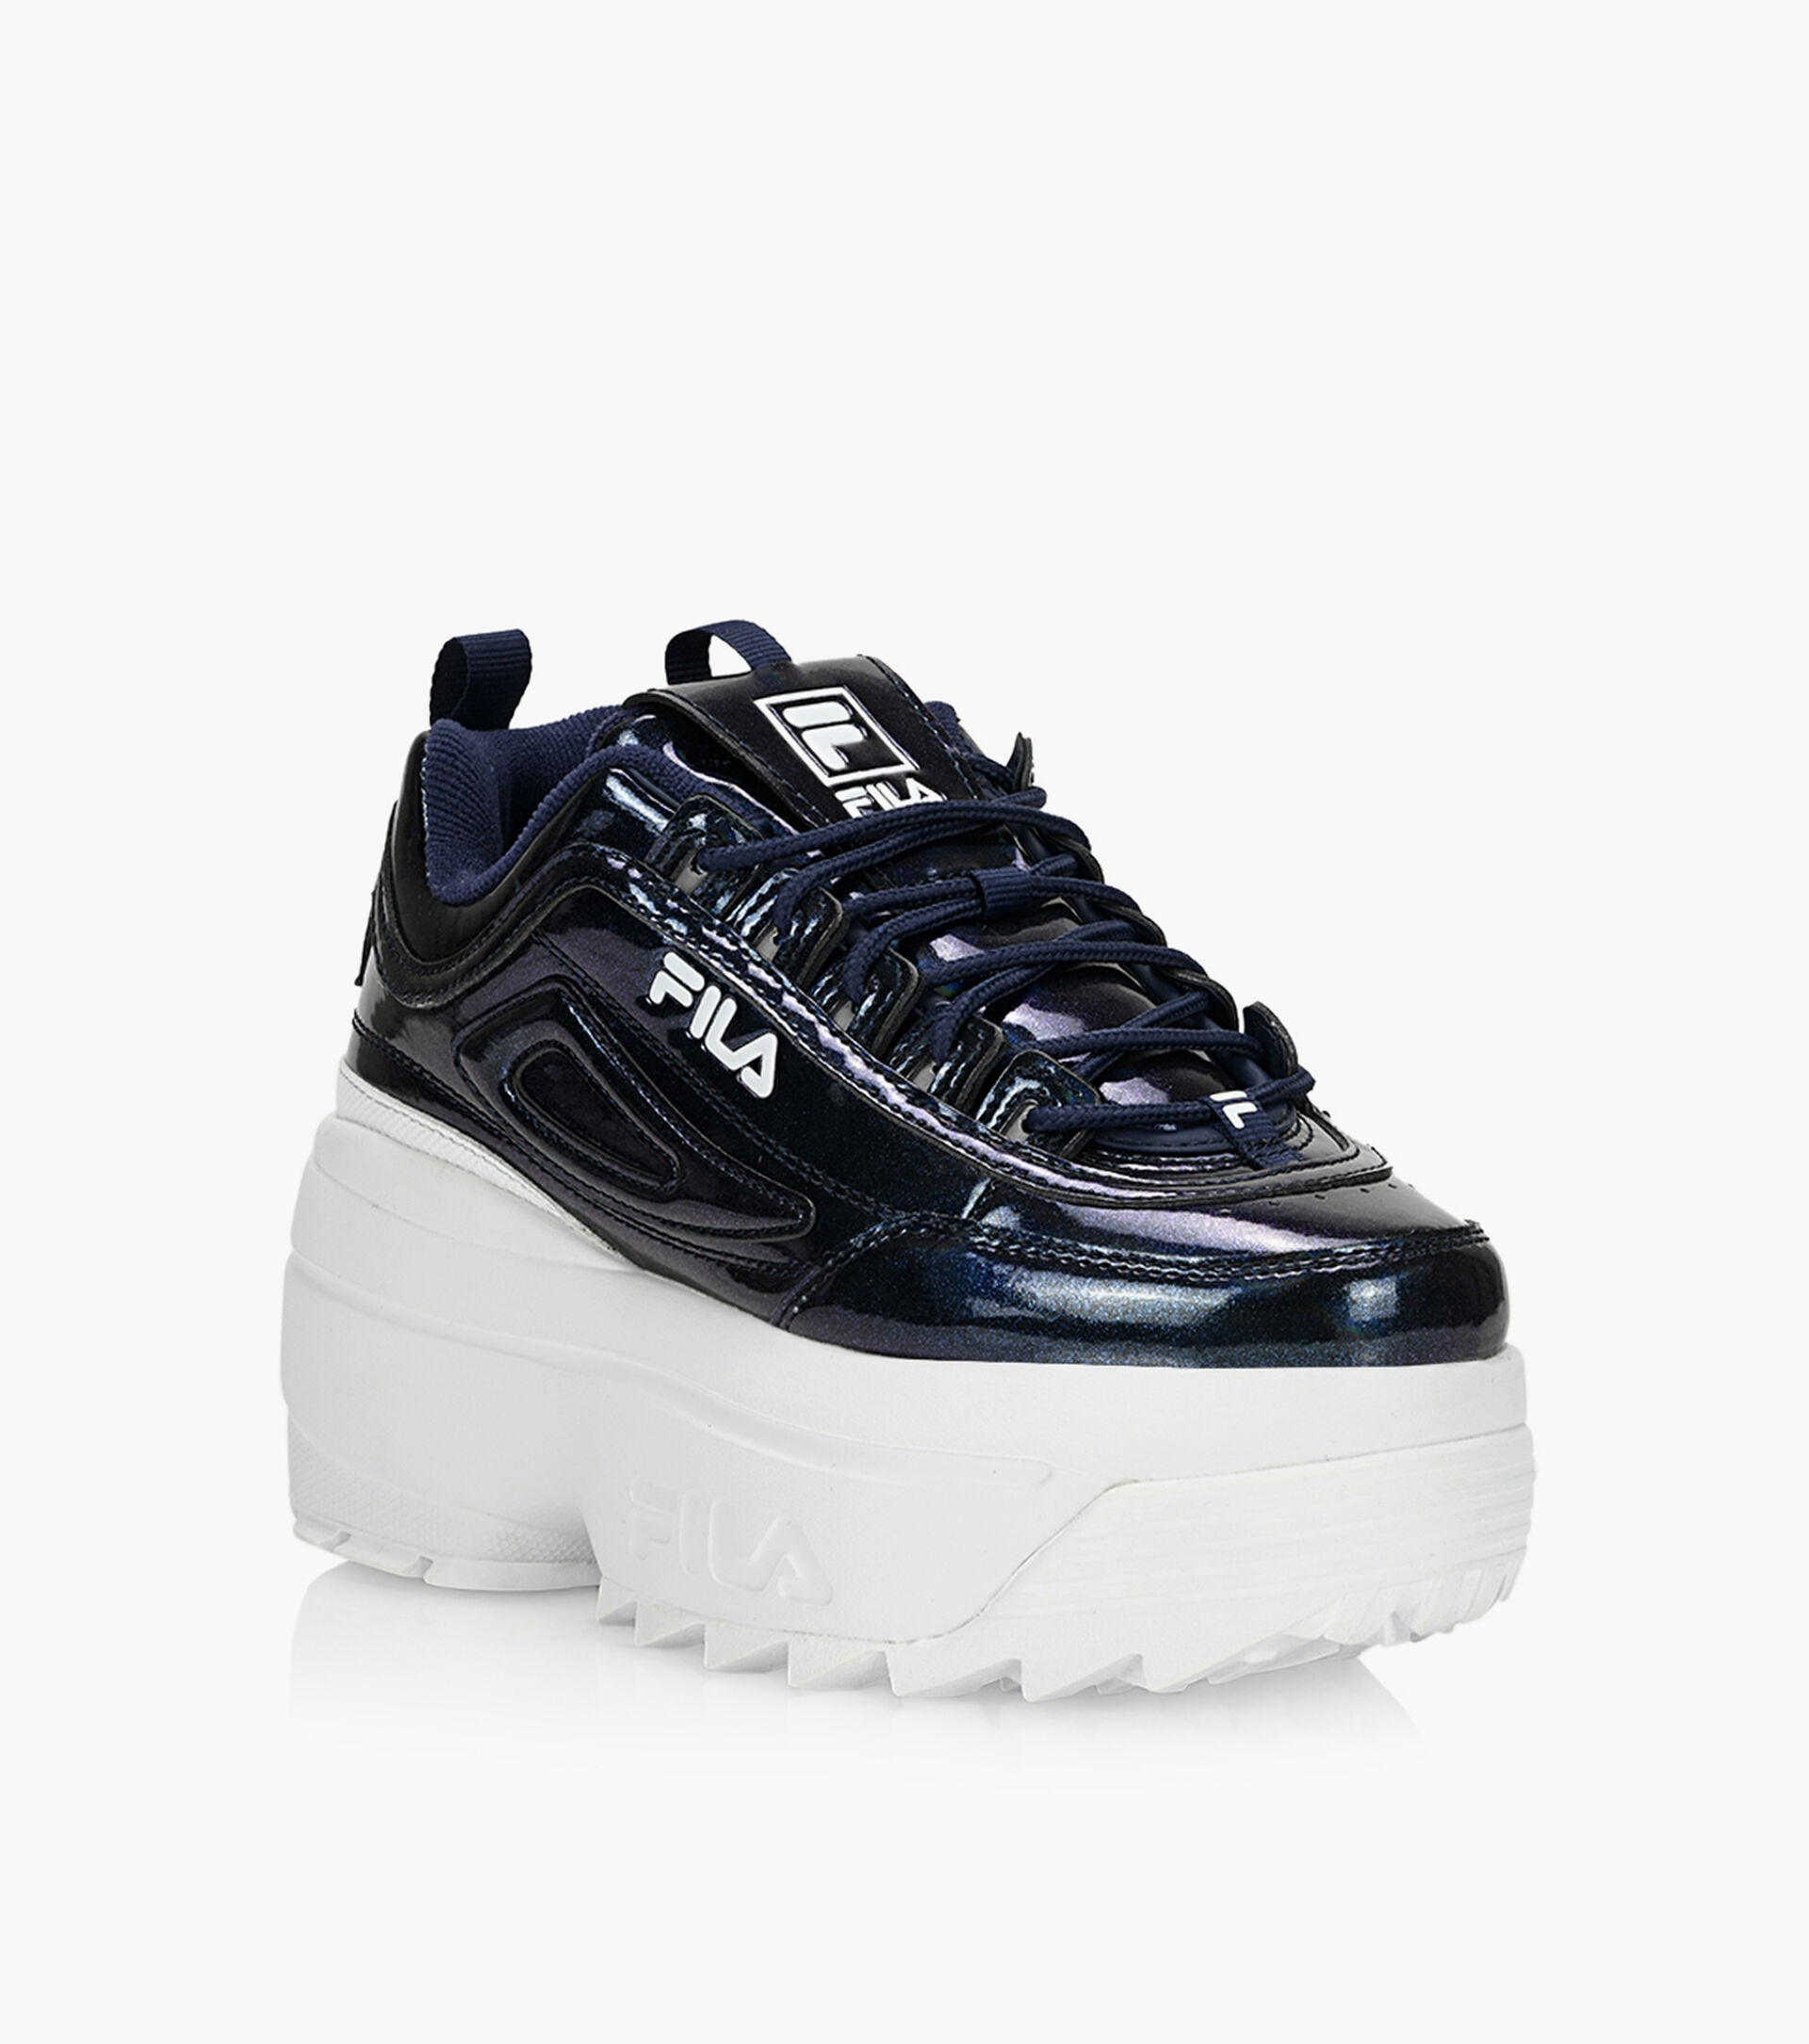 FILA DISRUPTOR II WEDGE GALATIC GLAZE - Blue Leather | Browns Shoes